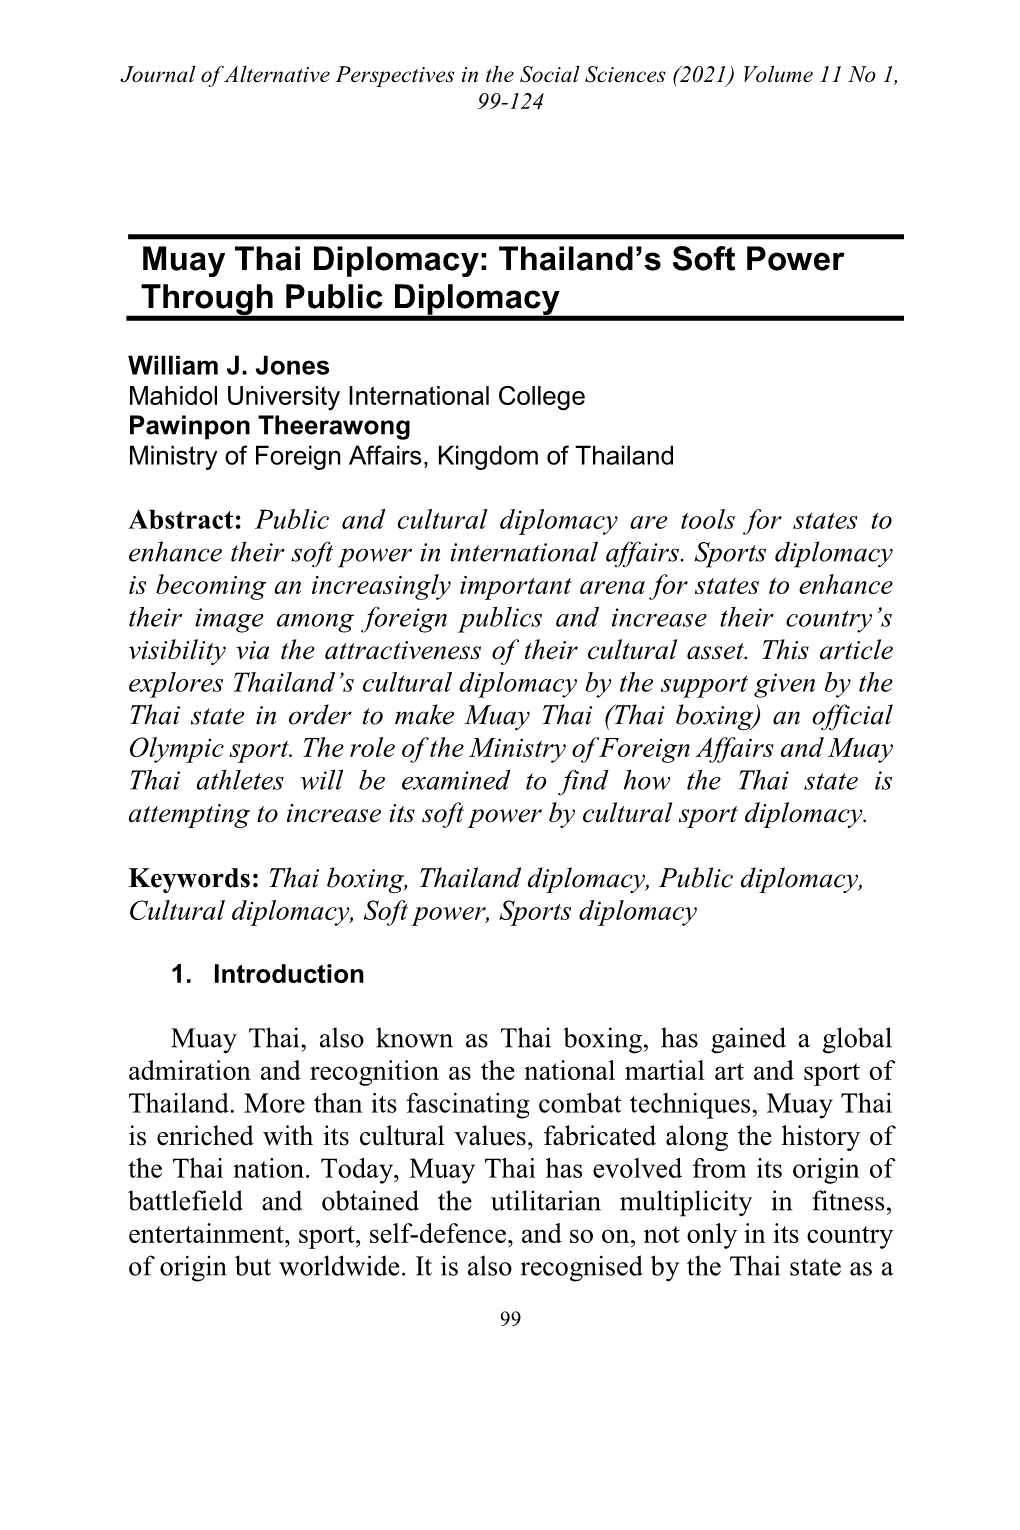 Muay Thai Diplomacy: Thailand’S Soft Power Through Public Diplomacy